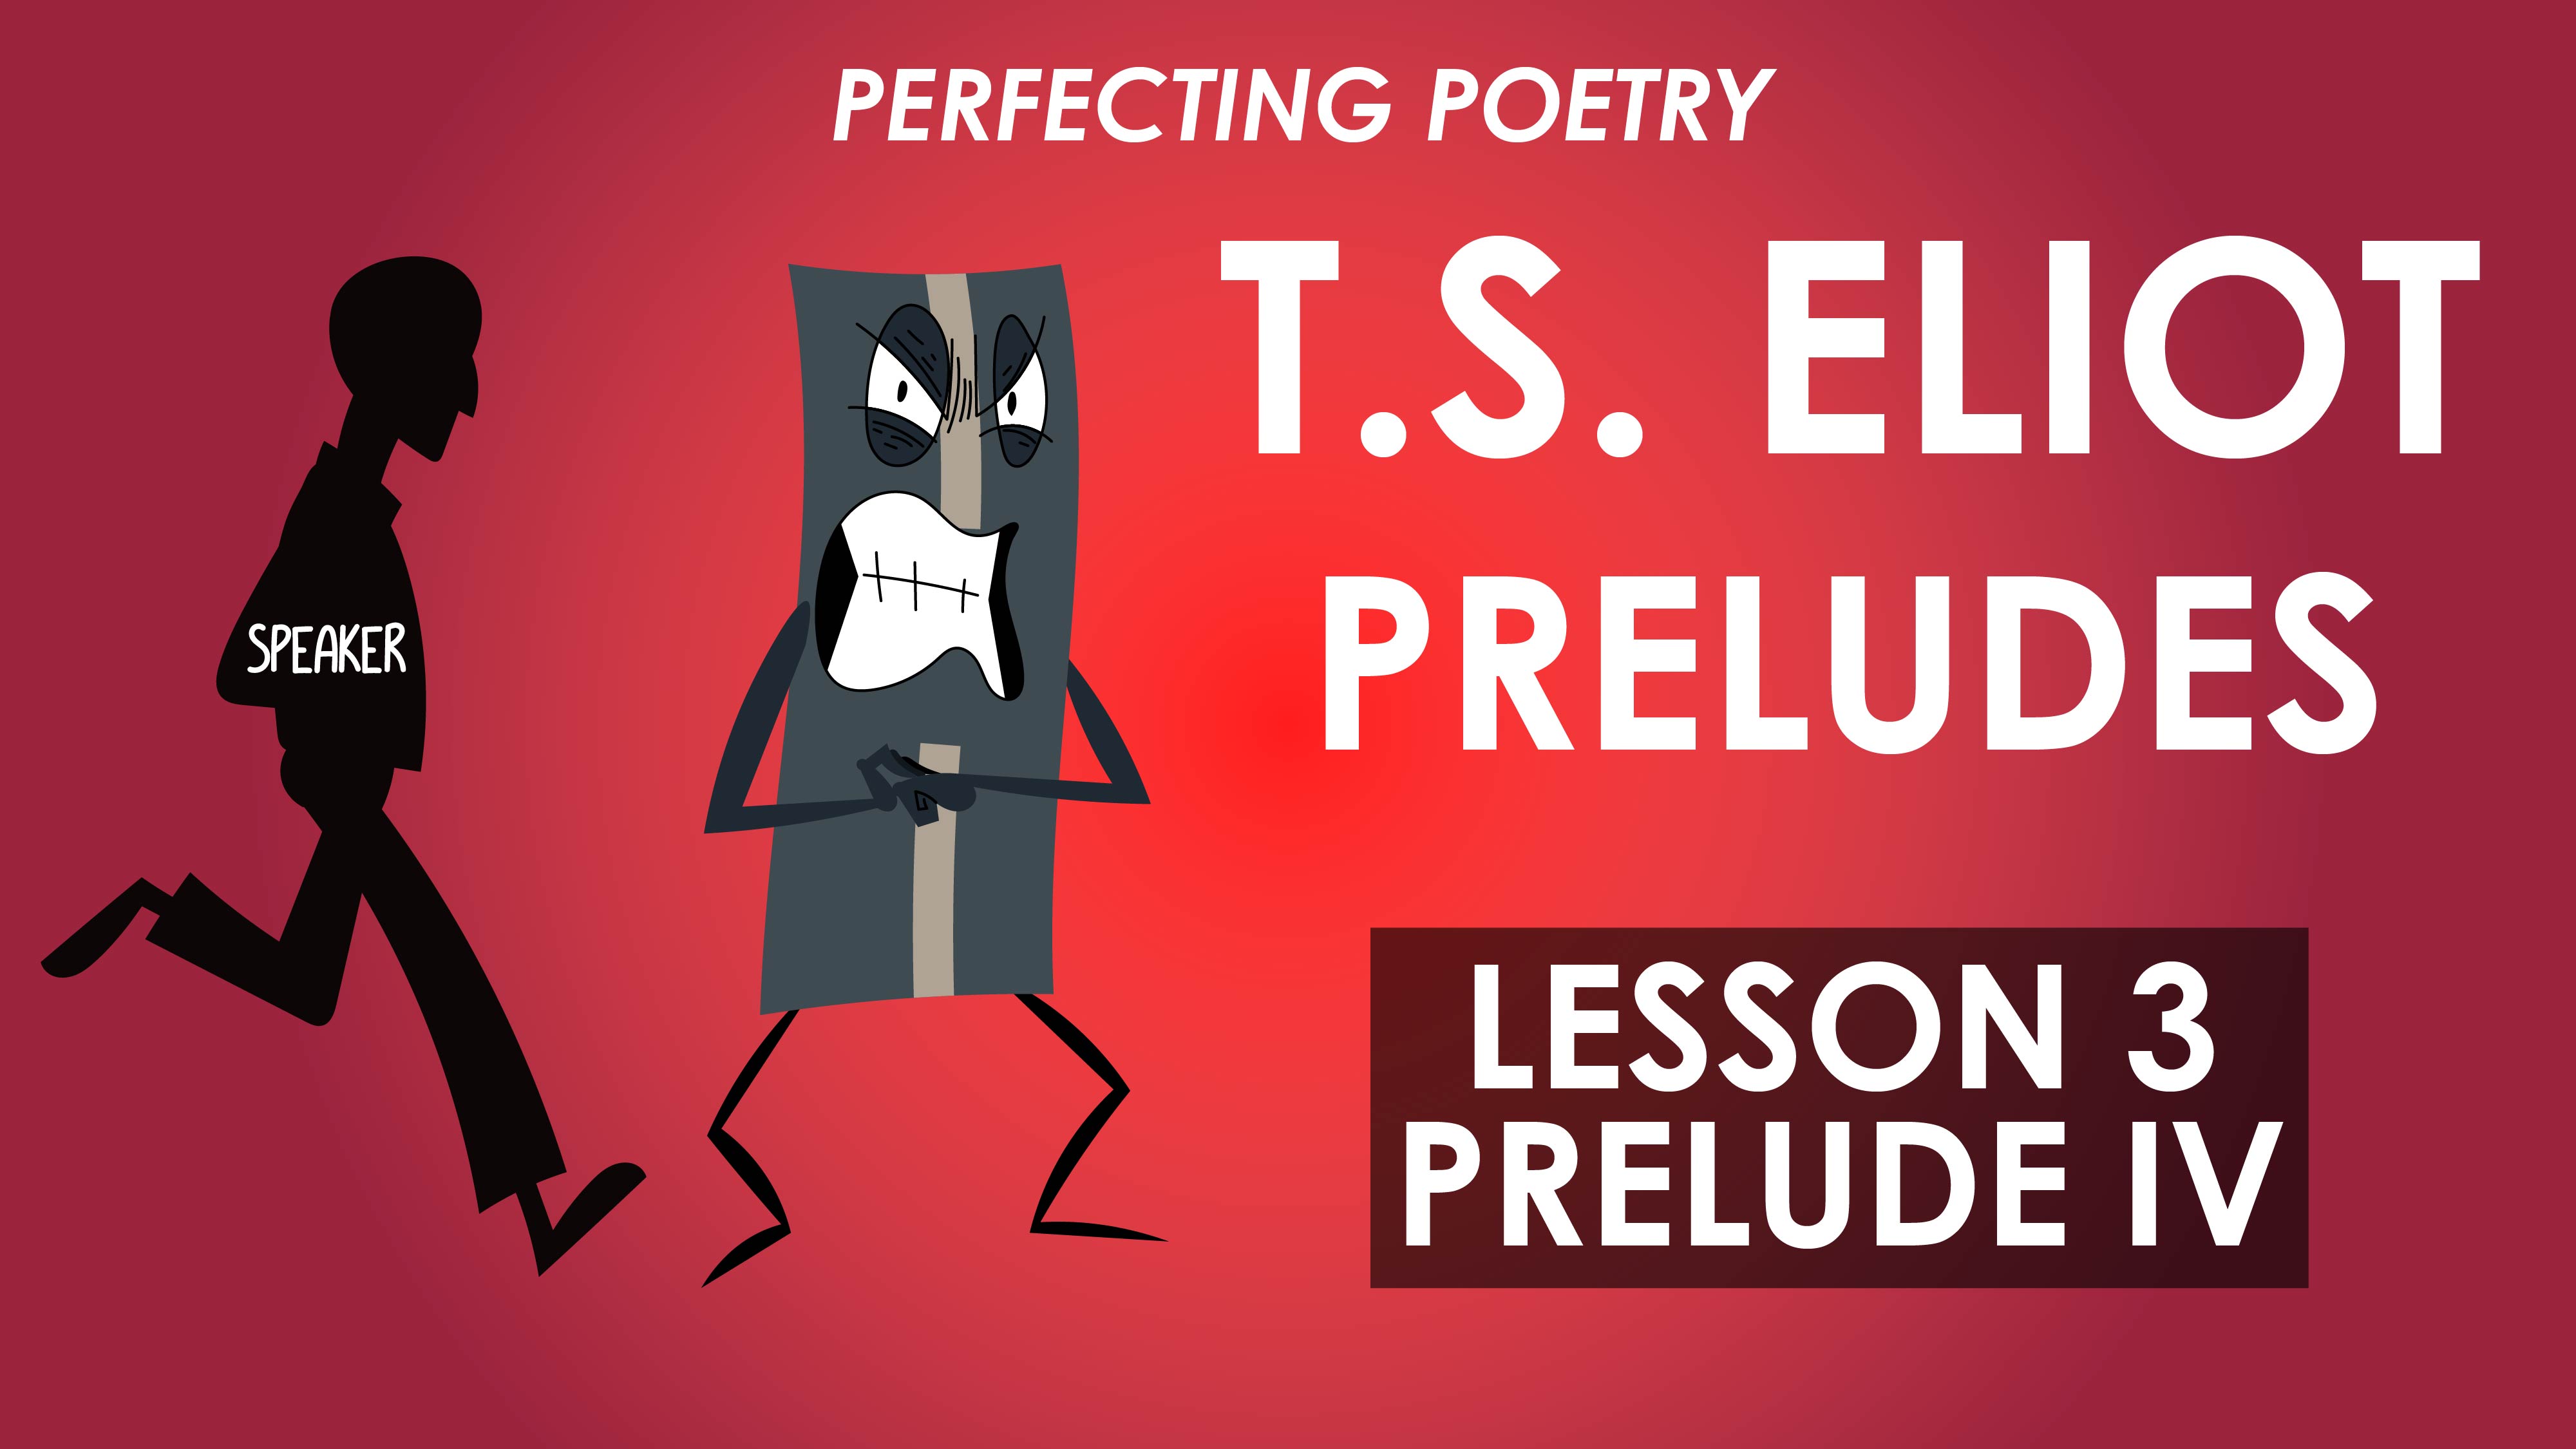 Prelude 4 - T.S. Eliot - Perfecting Poetry